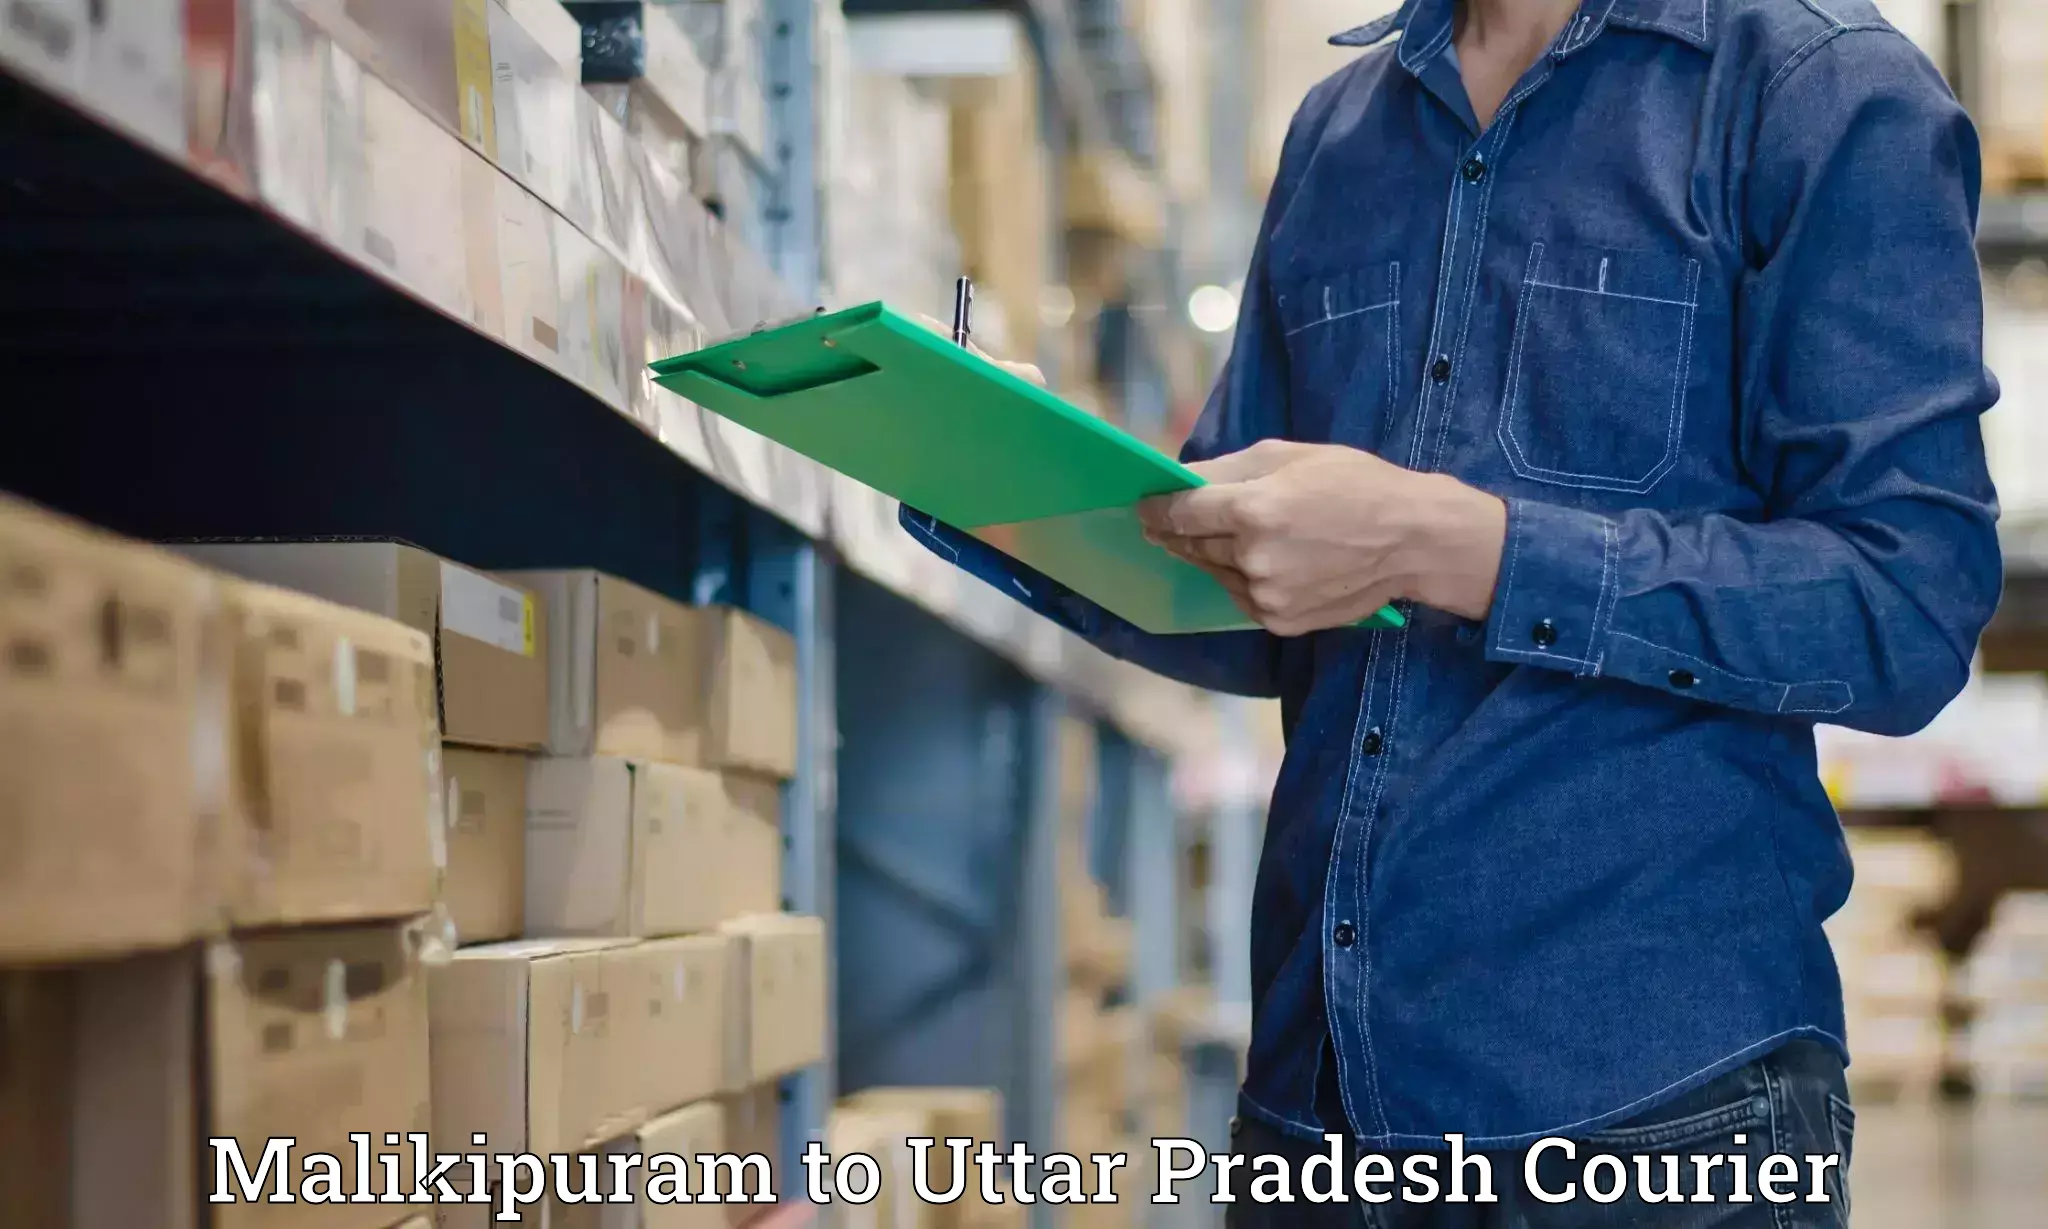 Sustainable courier practices Malikipuram to Sant Kabir Nagar